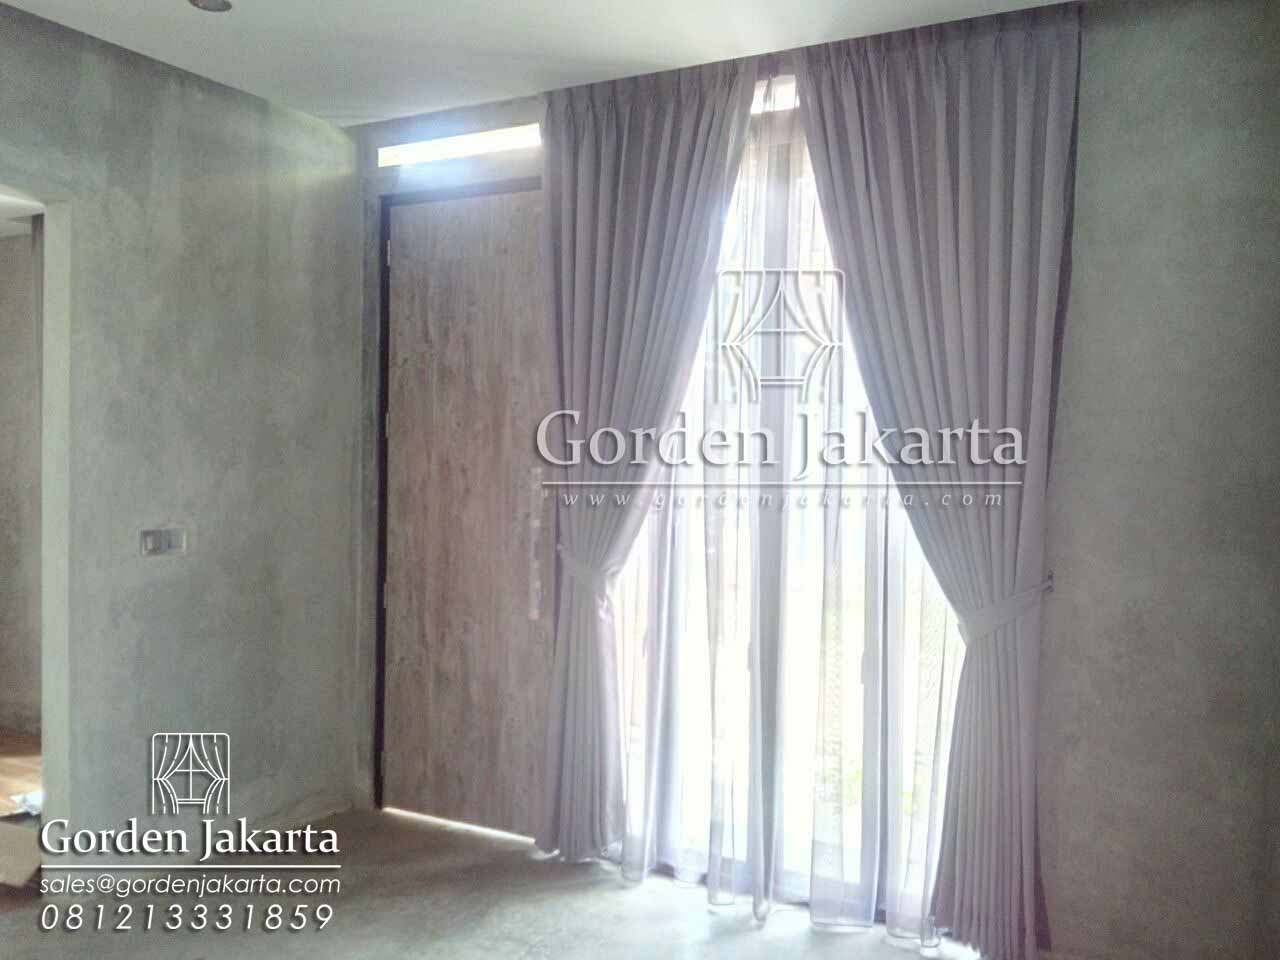 Gorden Jakarta 081213331859 Gorden Minimalis Toko Gorden